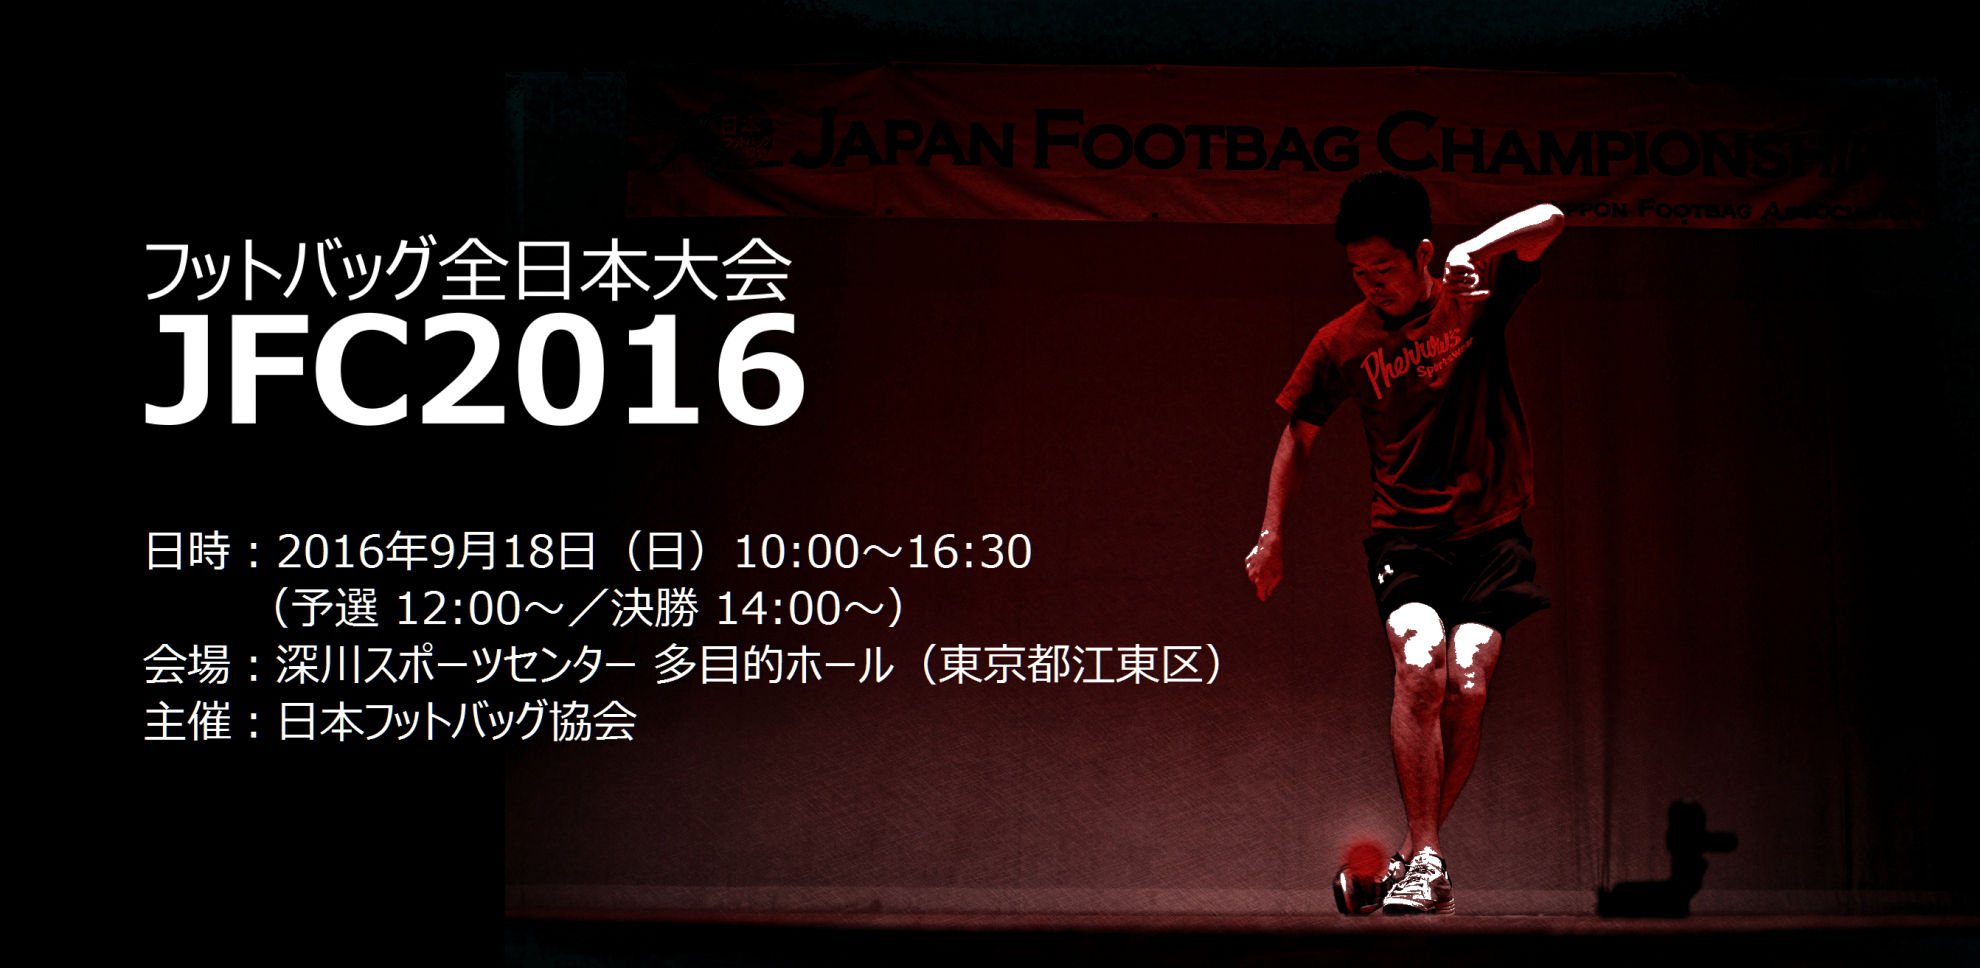 Japan Footbag Championships 2016 on Sep. 18(Open 10:00am)